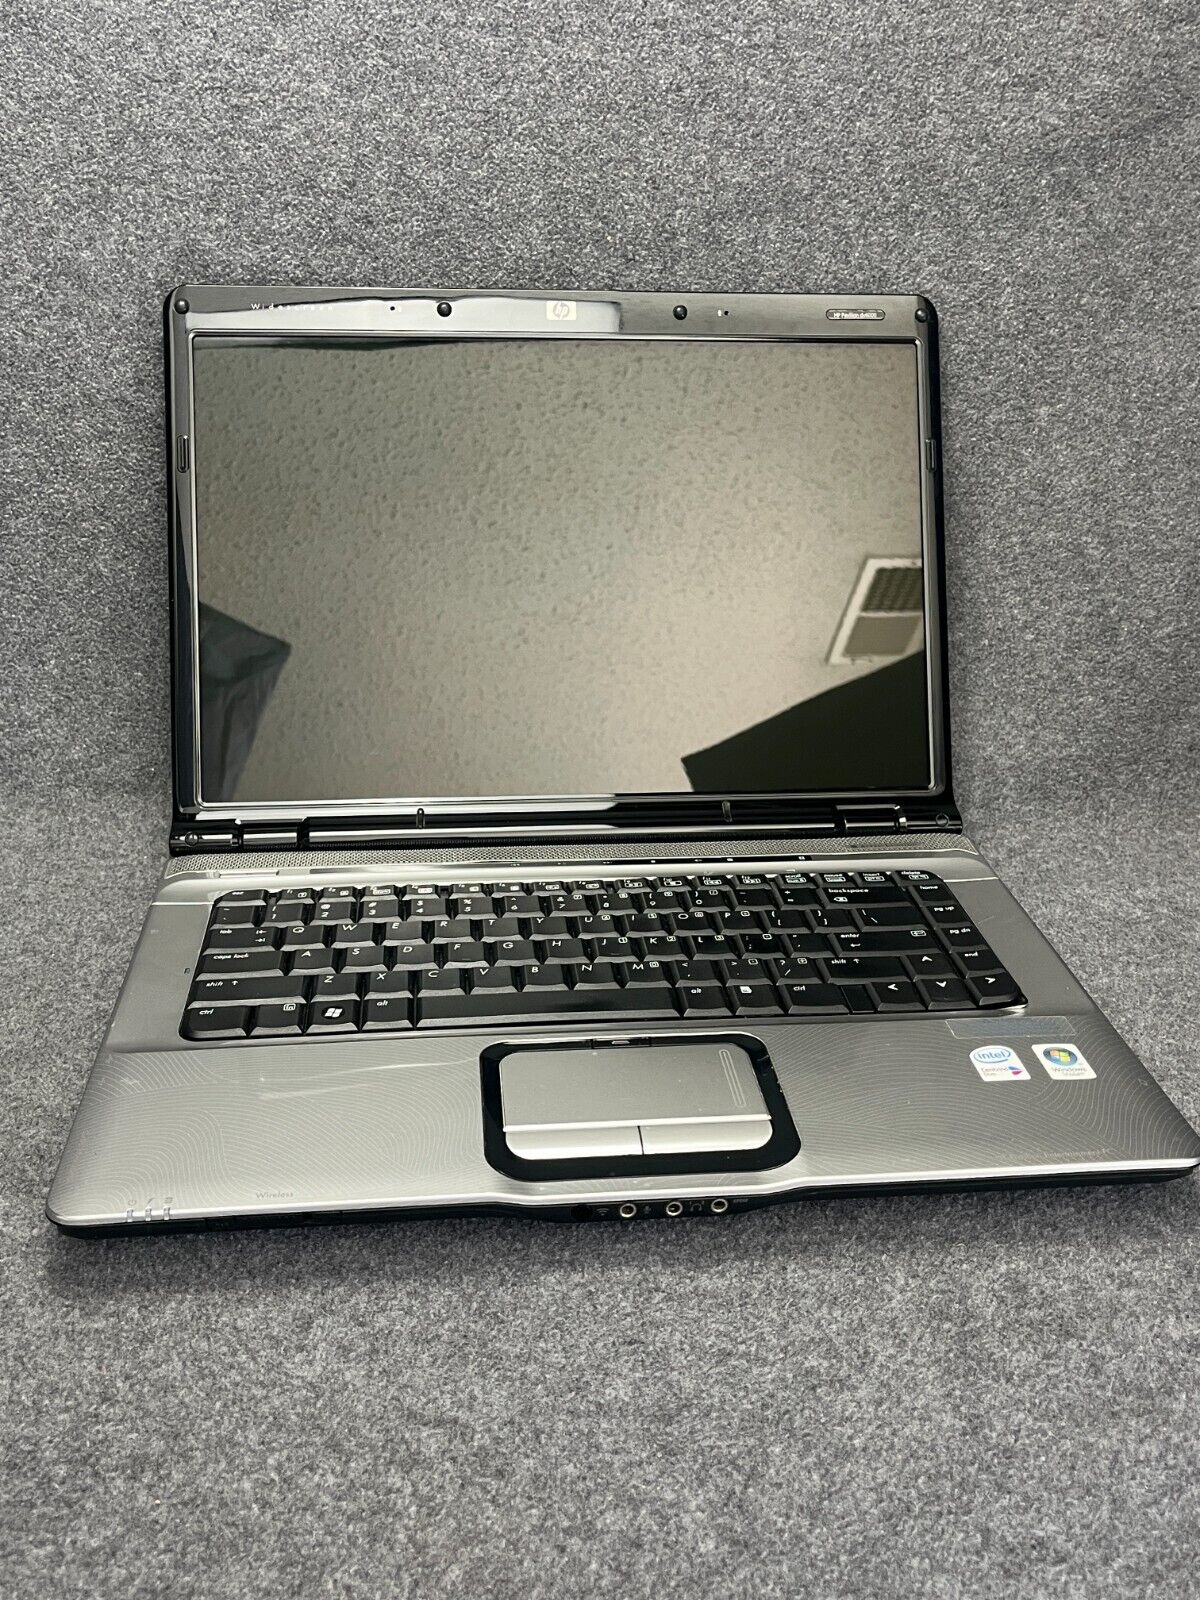 HP Pavilion dv6000 Notebook Laptop Entertainment PC Vista Centrino